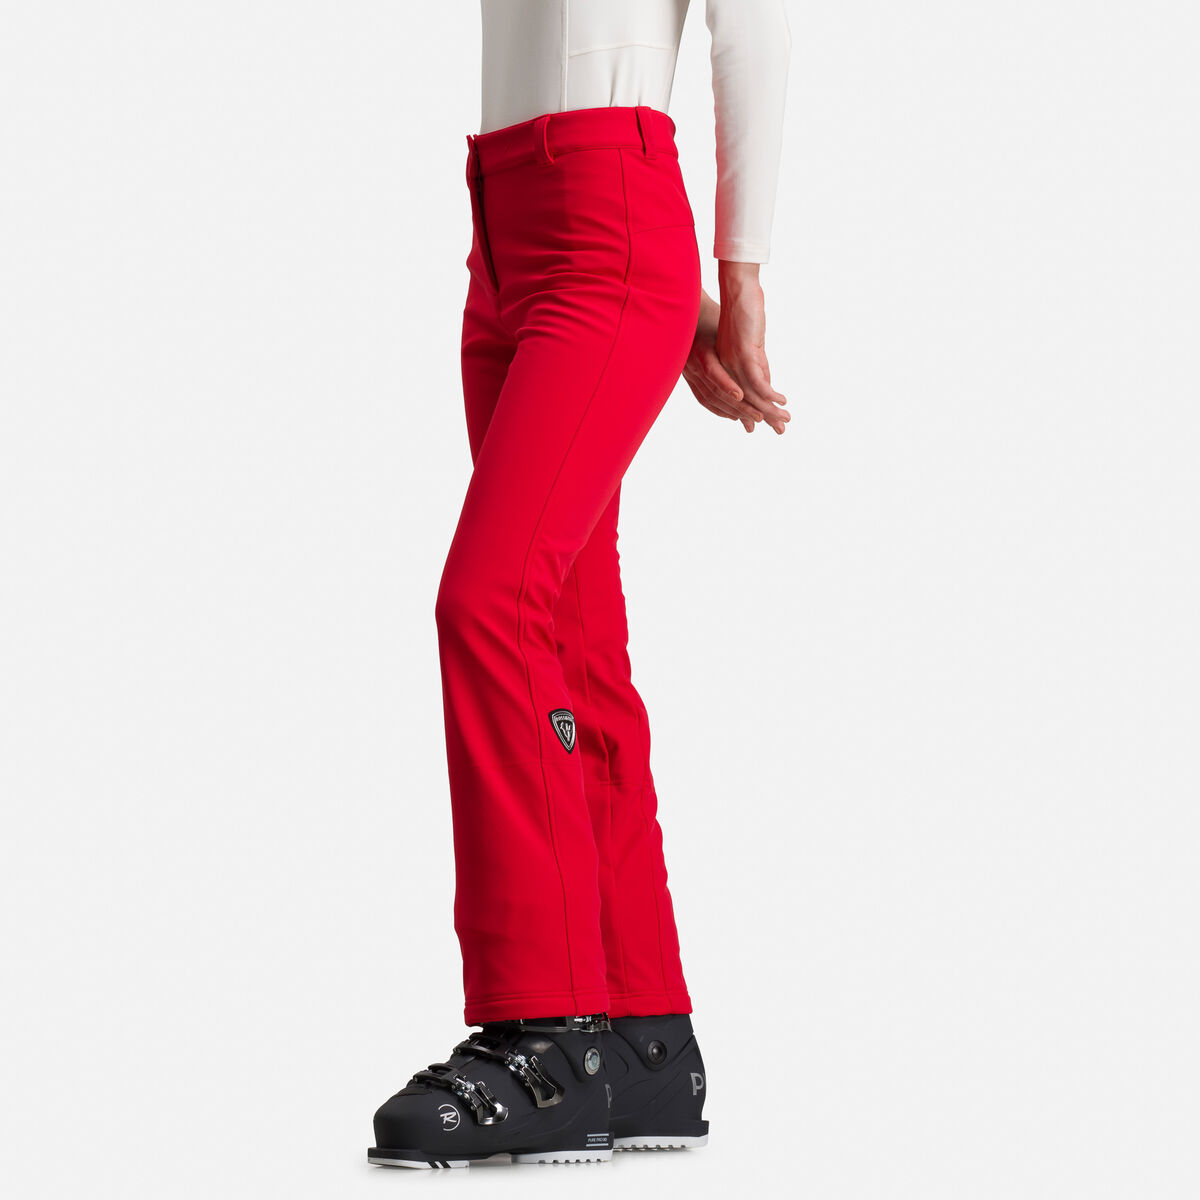 Women's Softshell Ski pants